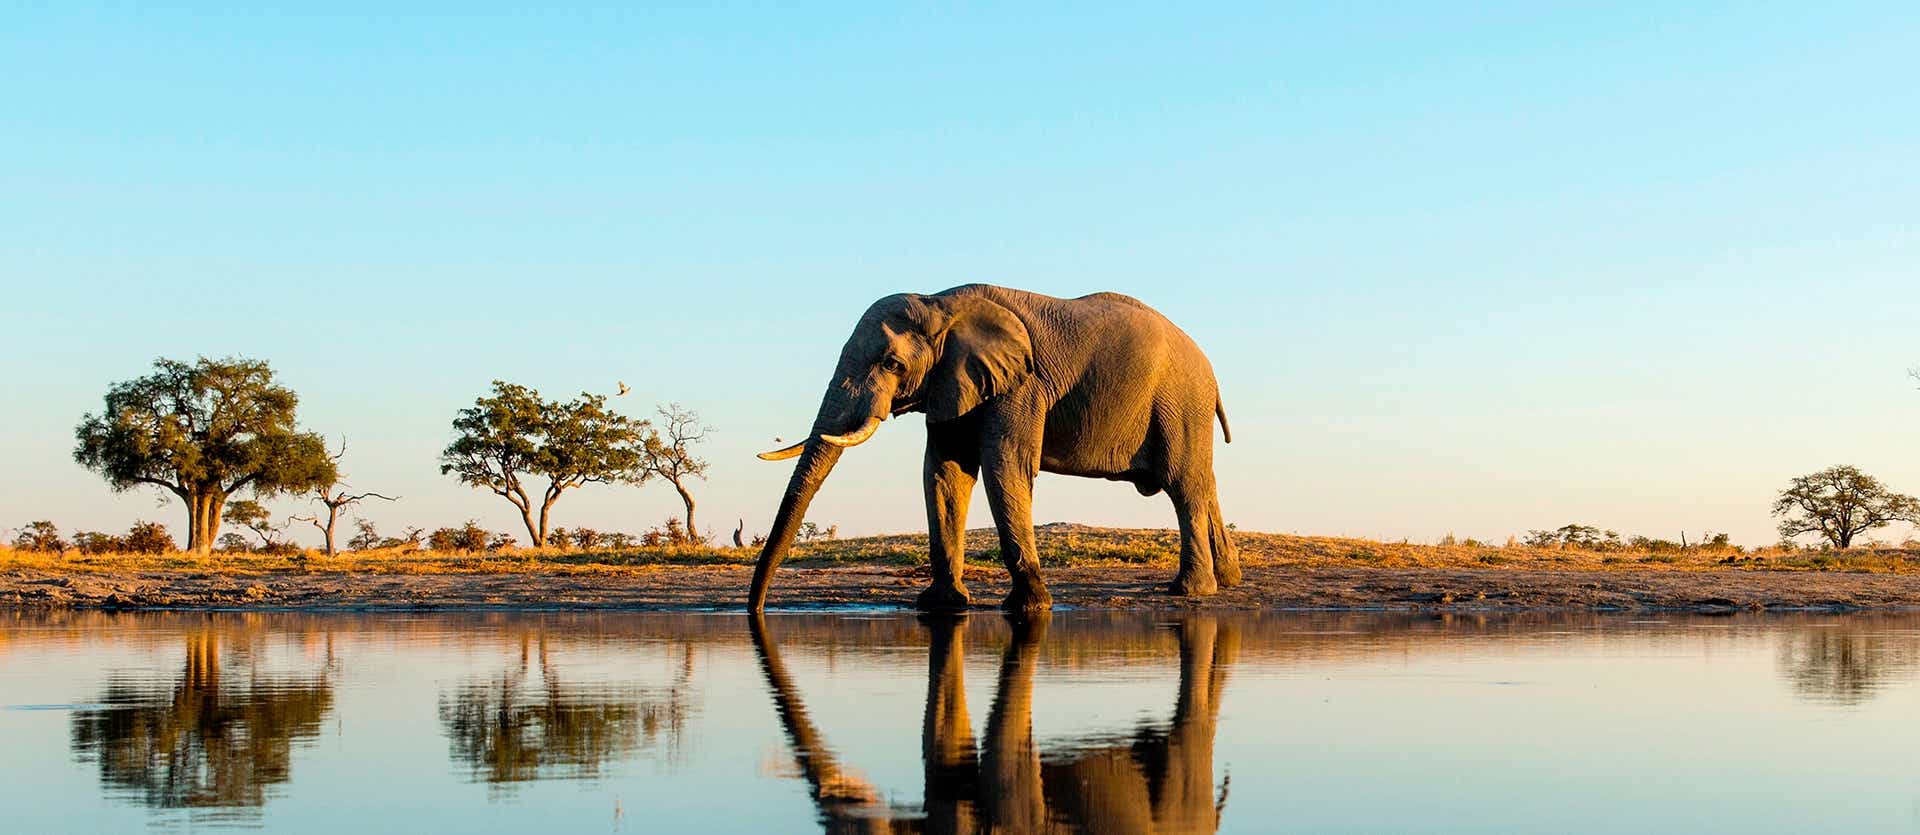 Elephant <span class="iconos separador"></span> Chobe National Park <span class="iconos separador"></span> Bostwana 